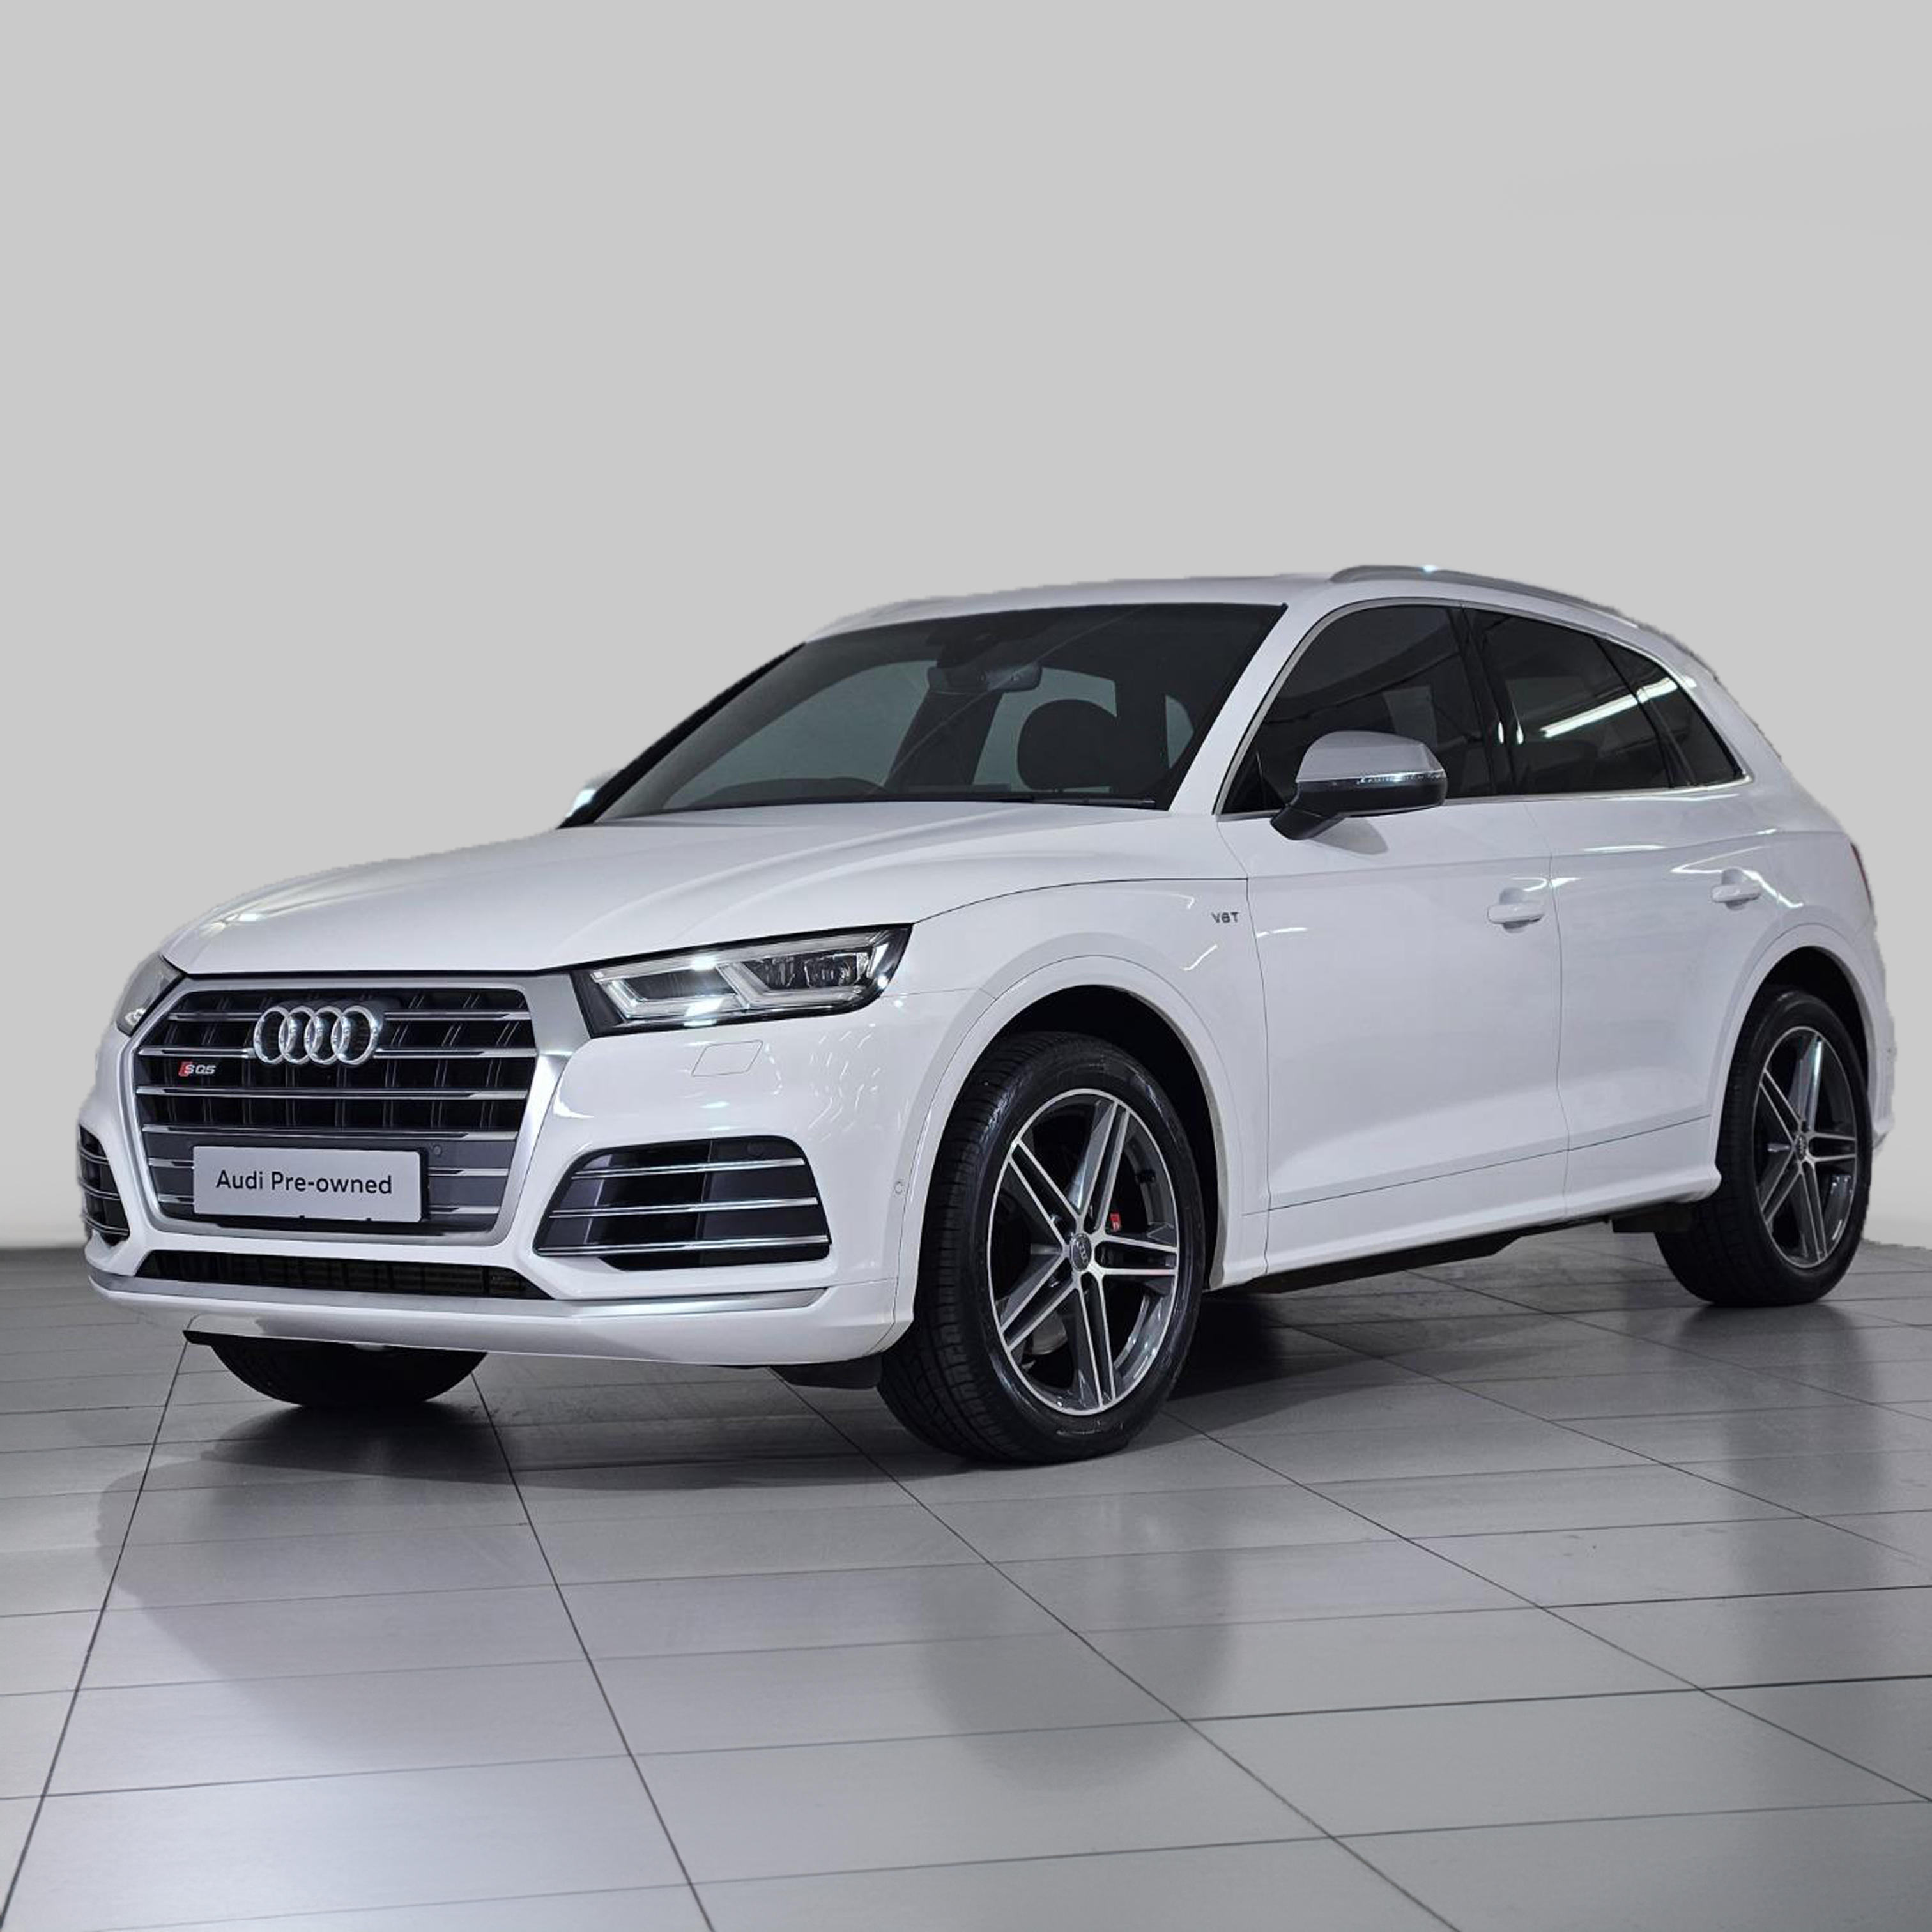 2018 Audi SQ5  for sale - 310322/